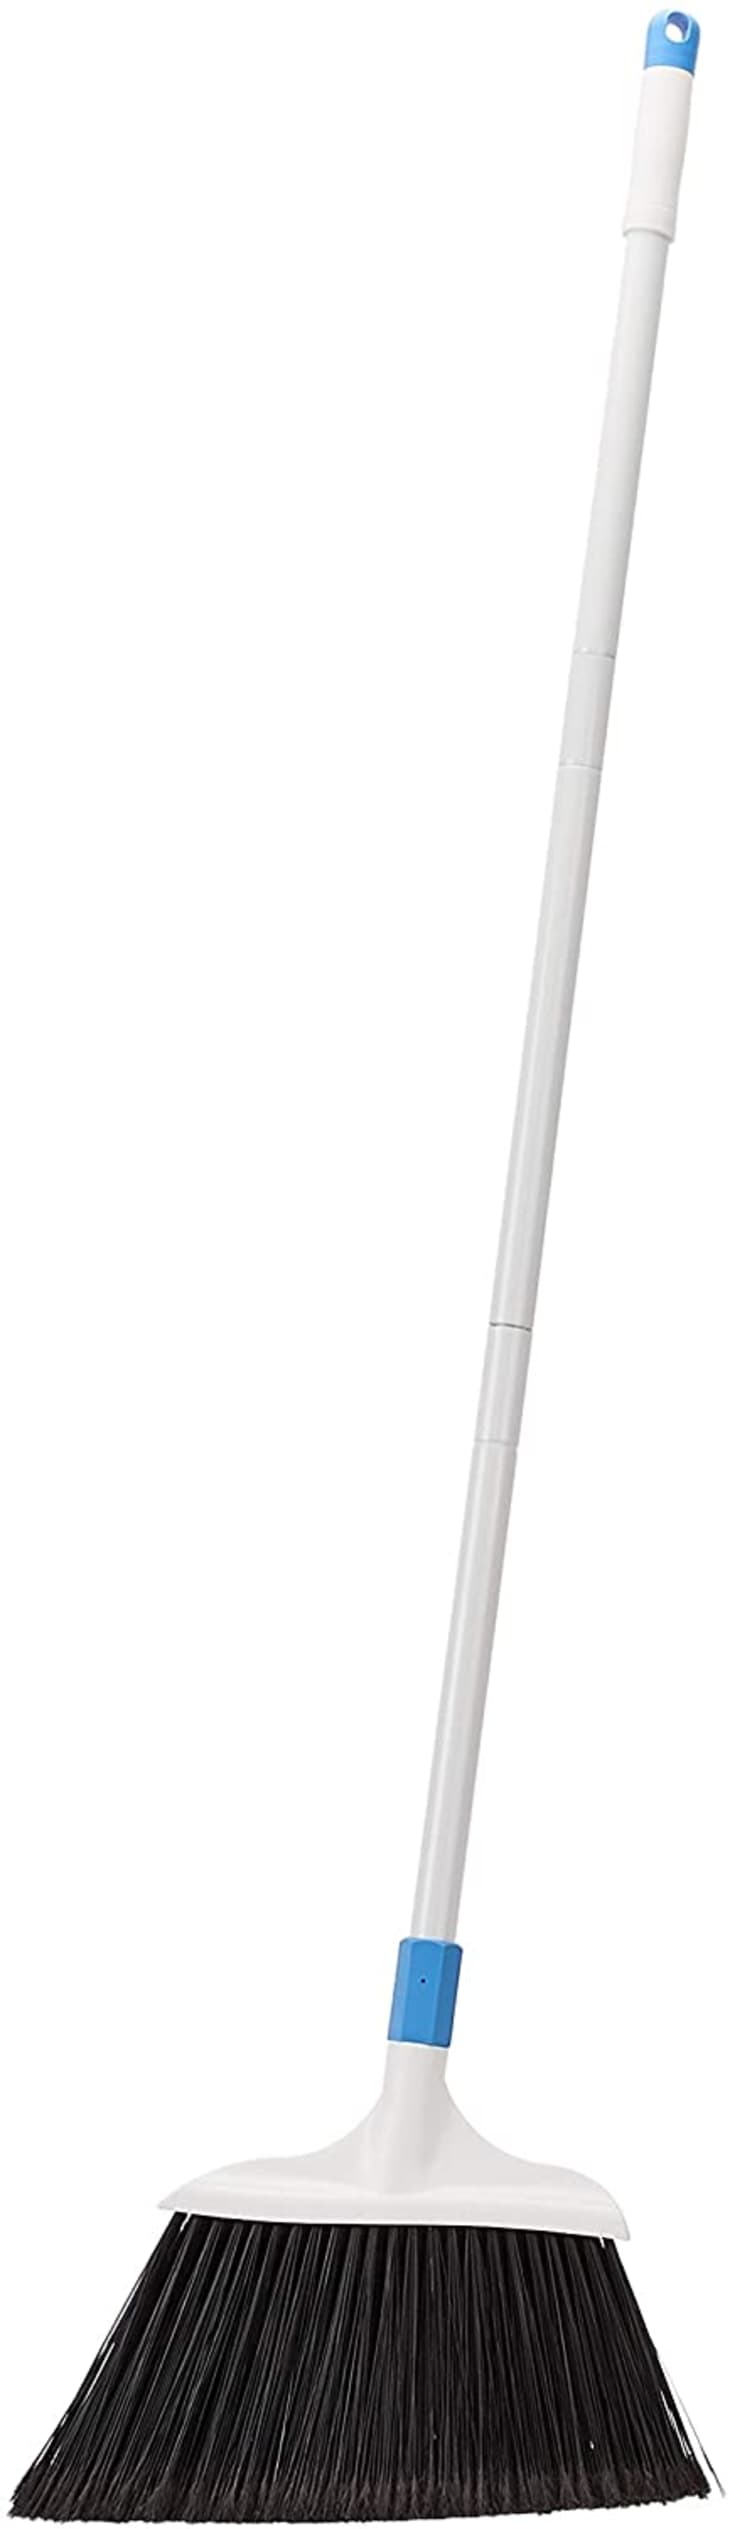 Product Image: Amazon Basics Heavy-Duty Broom